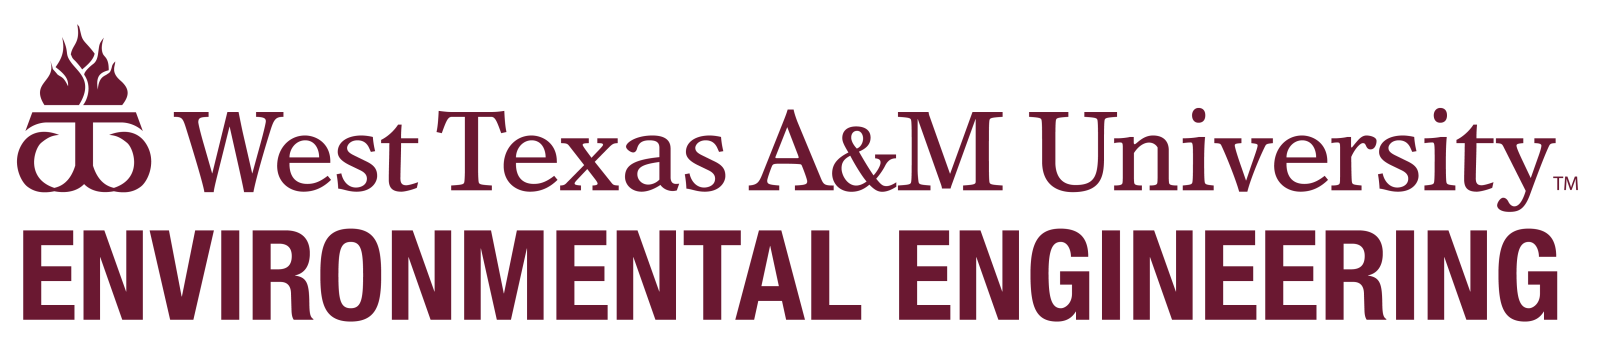 West Texas A&M University: Environmental Engineering Program